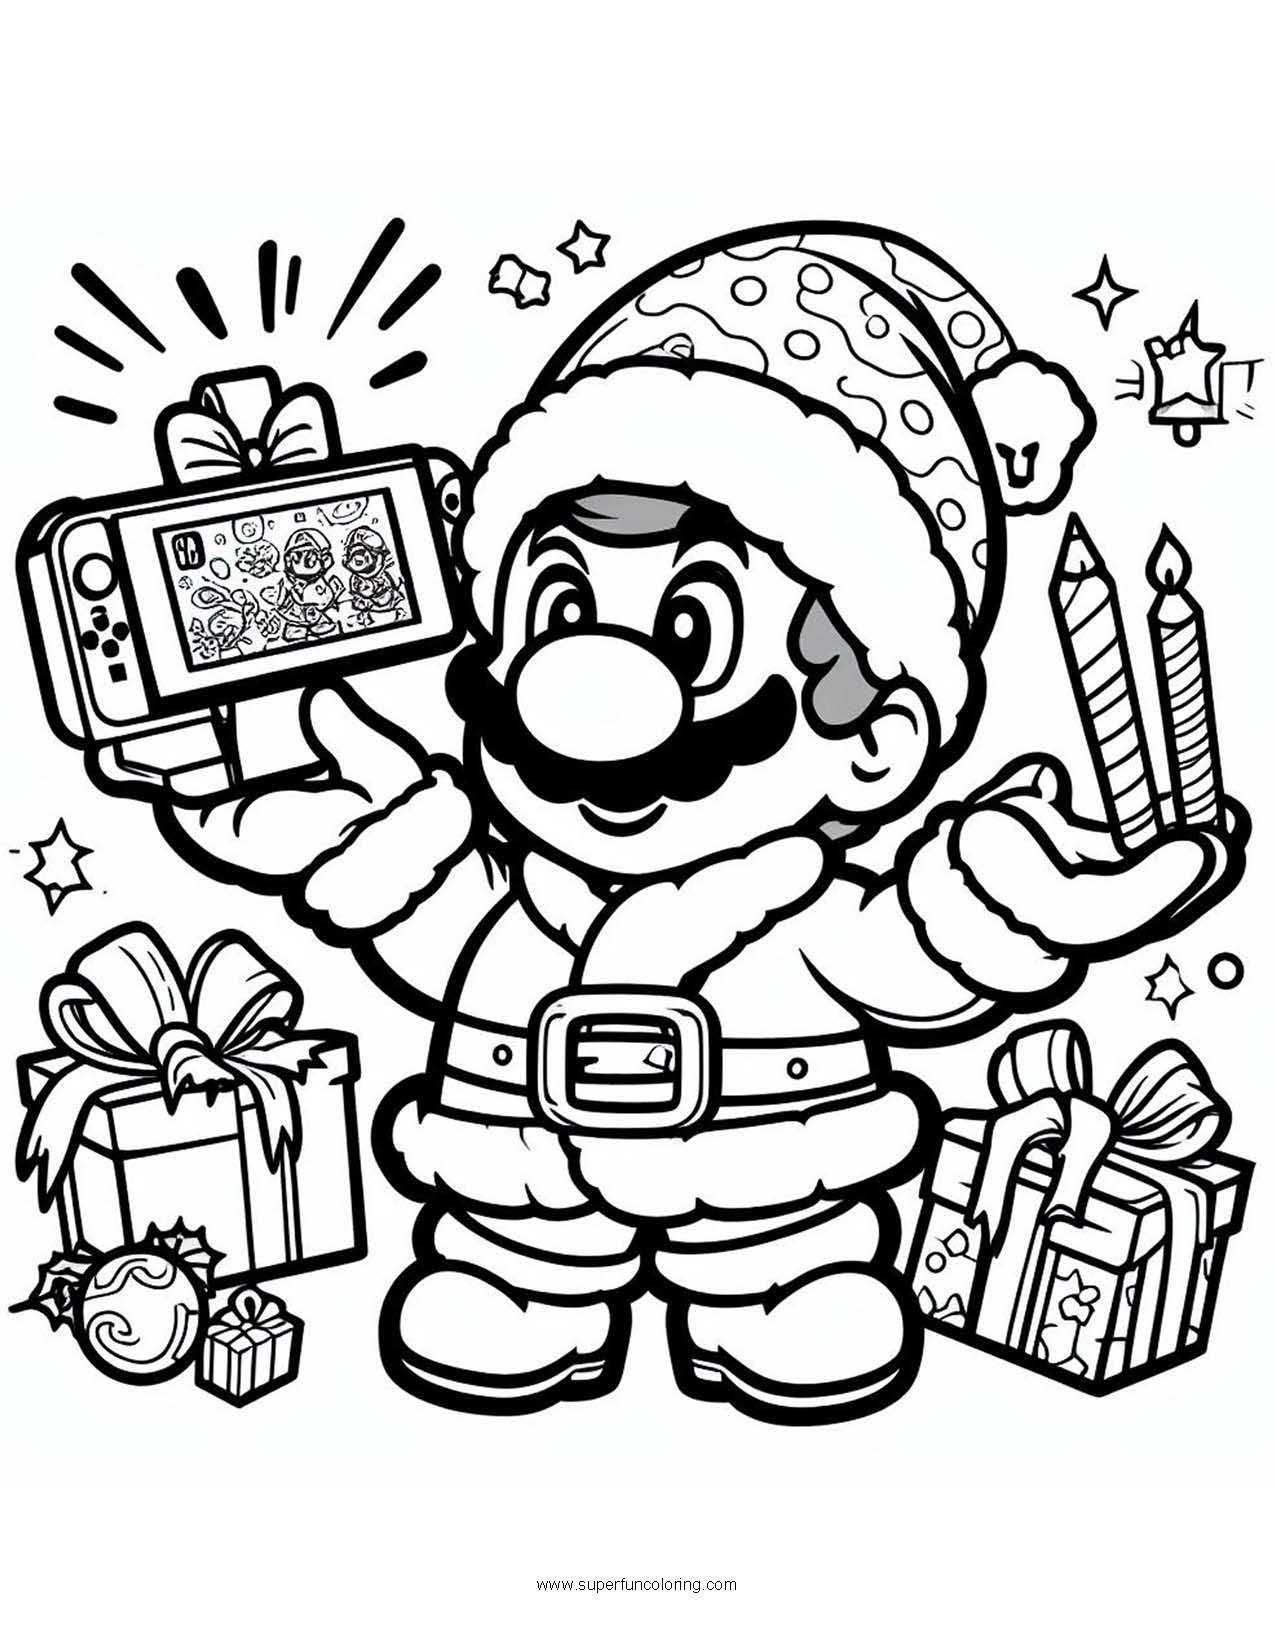 Mario christmas coloring page